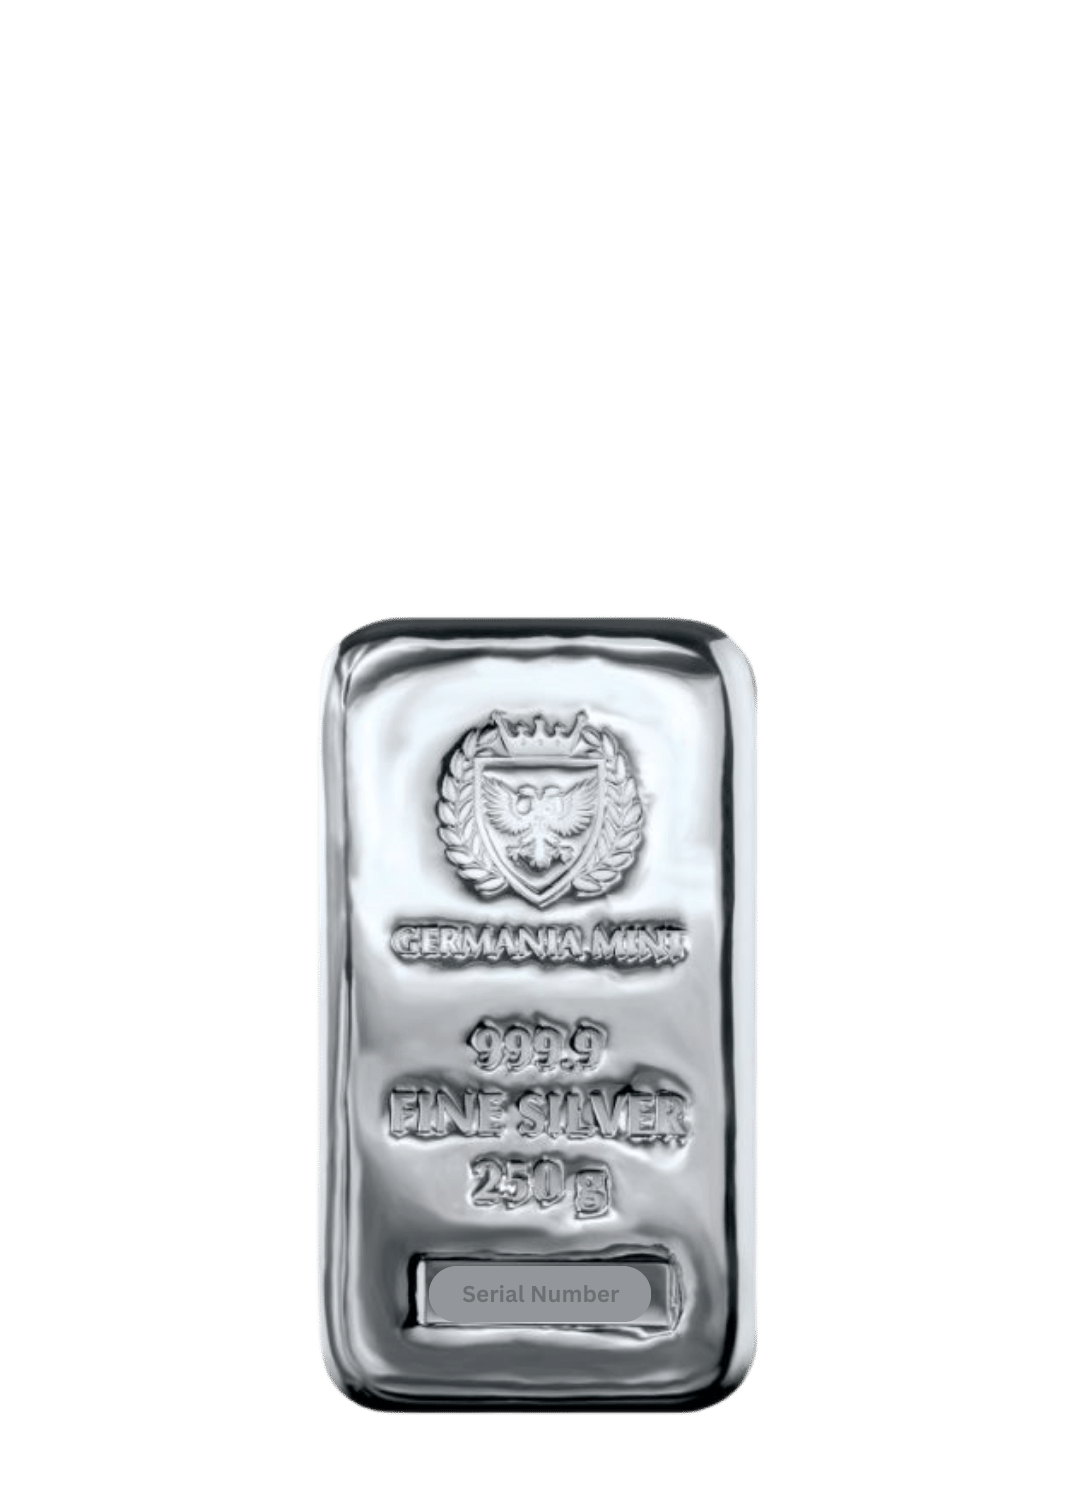 250 gram Germania Mint Silver Bar (Cast)